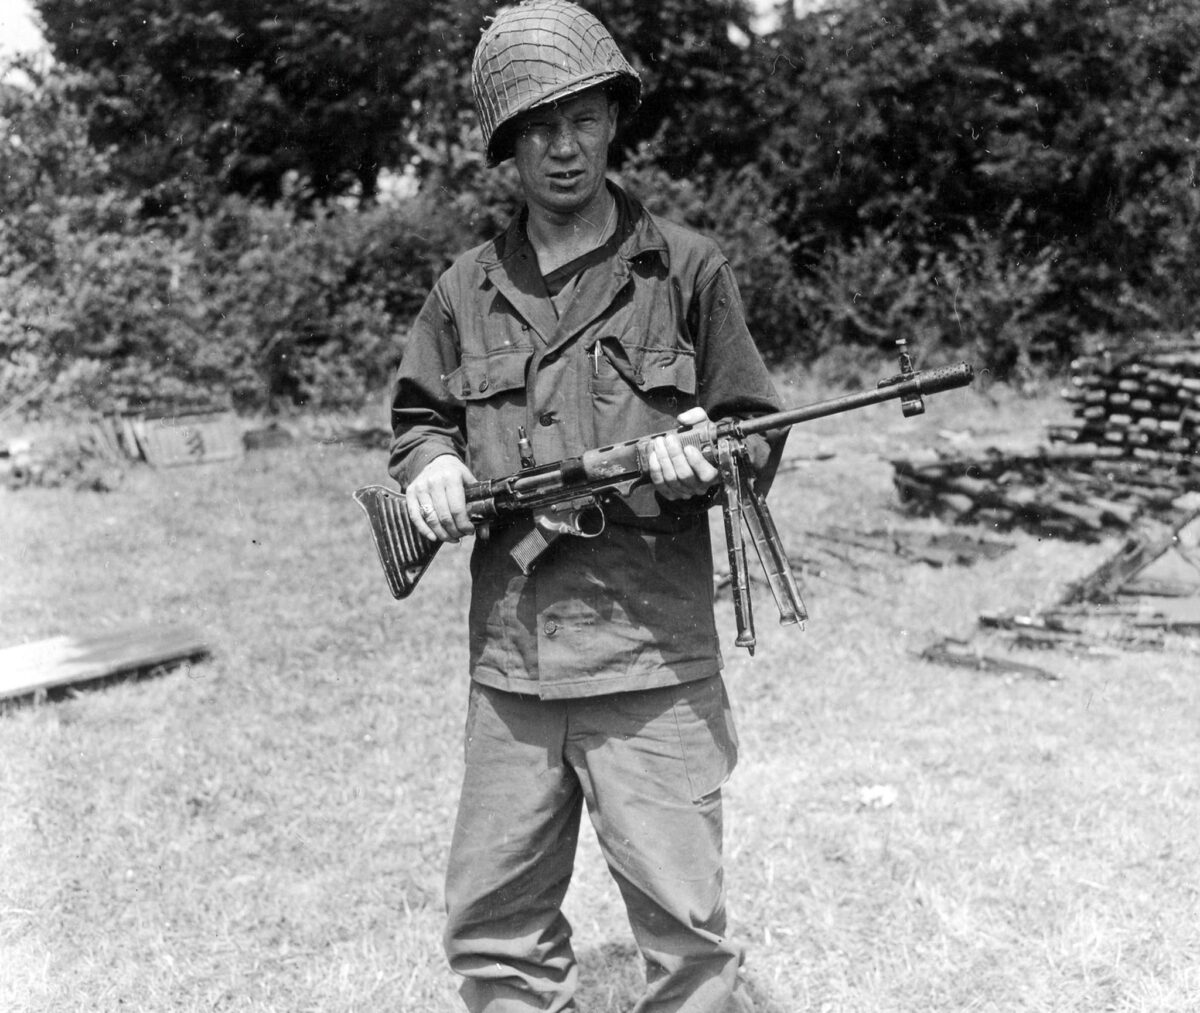 American soldier, FG-42